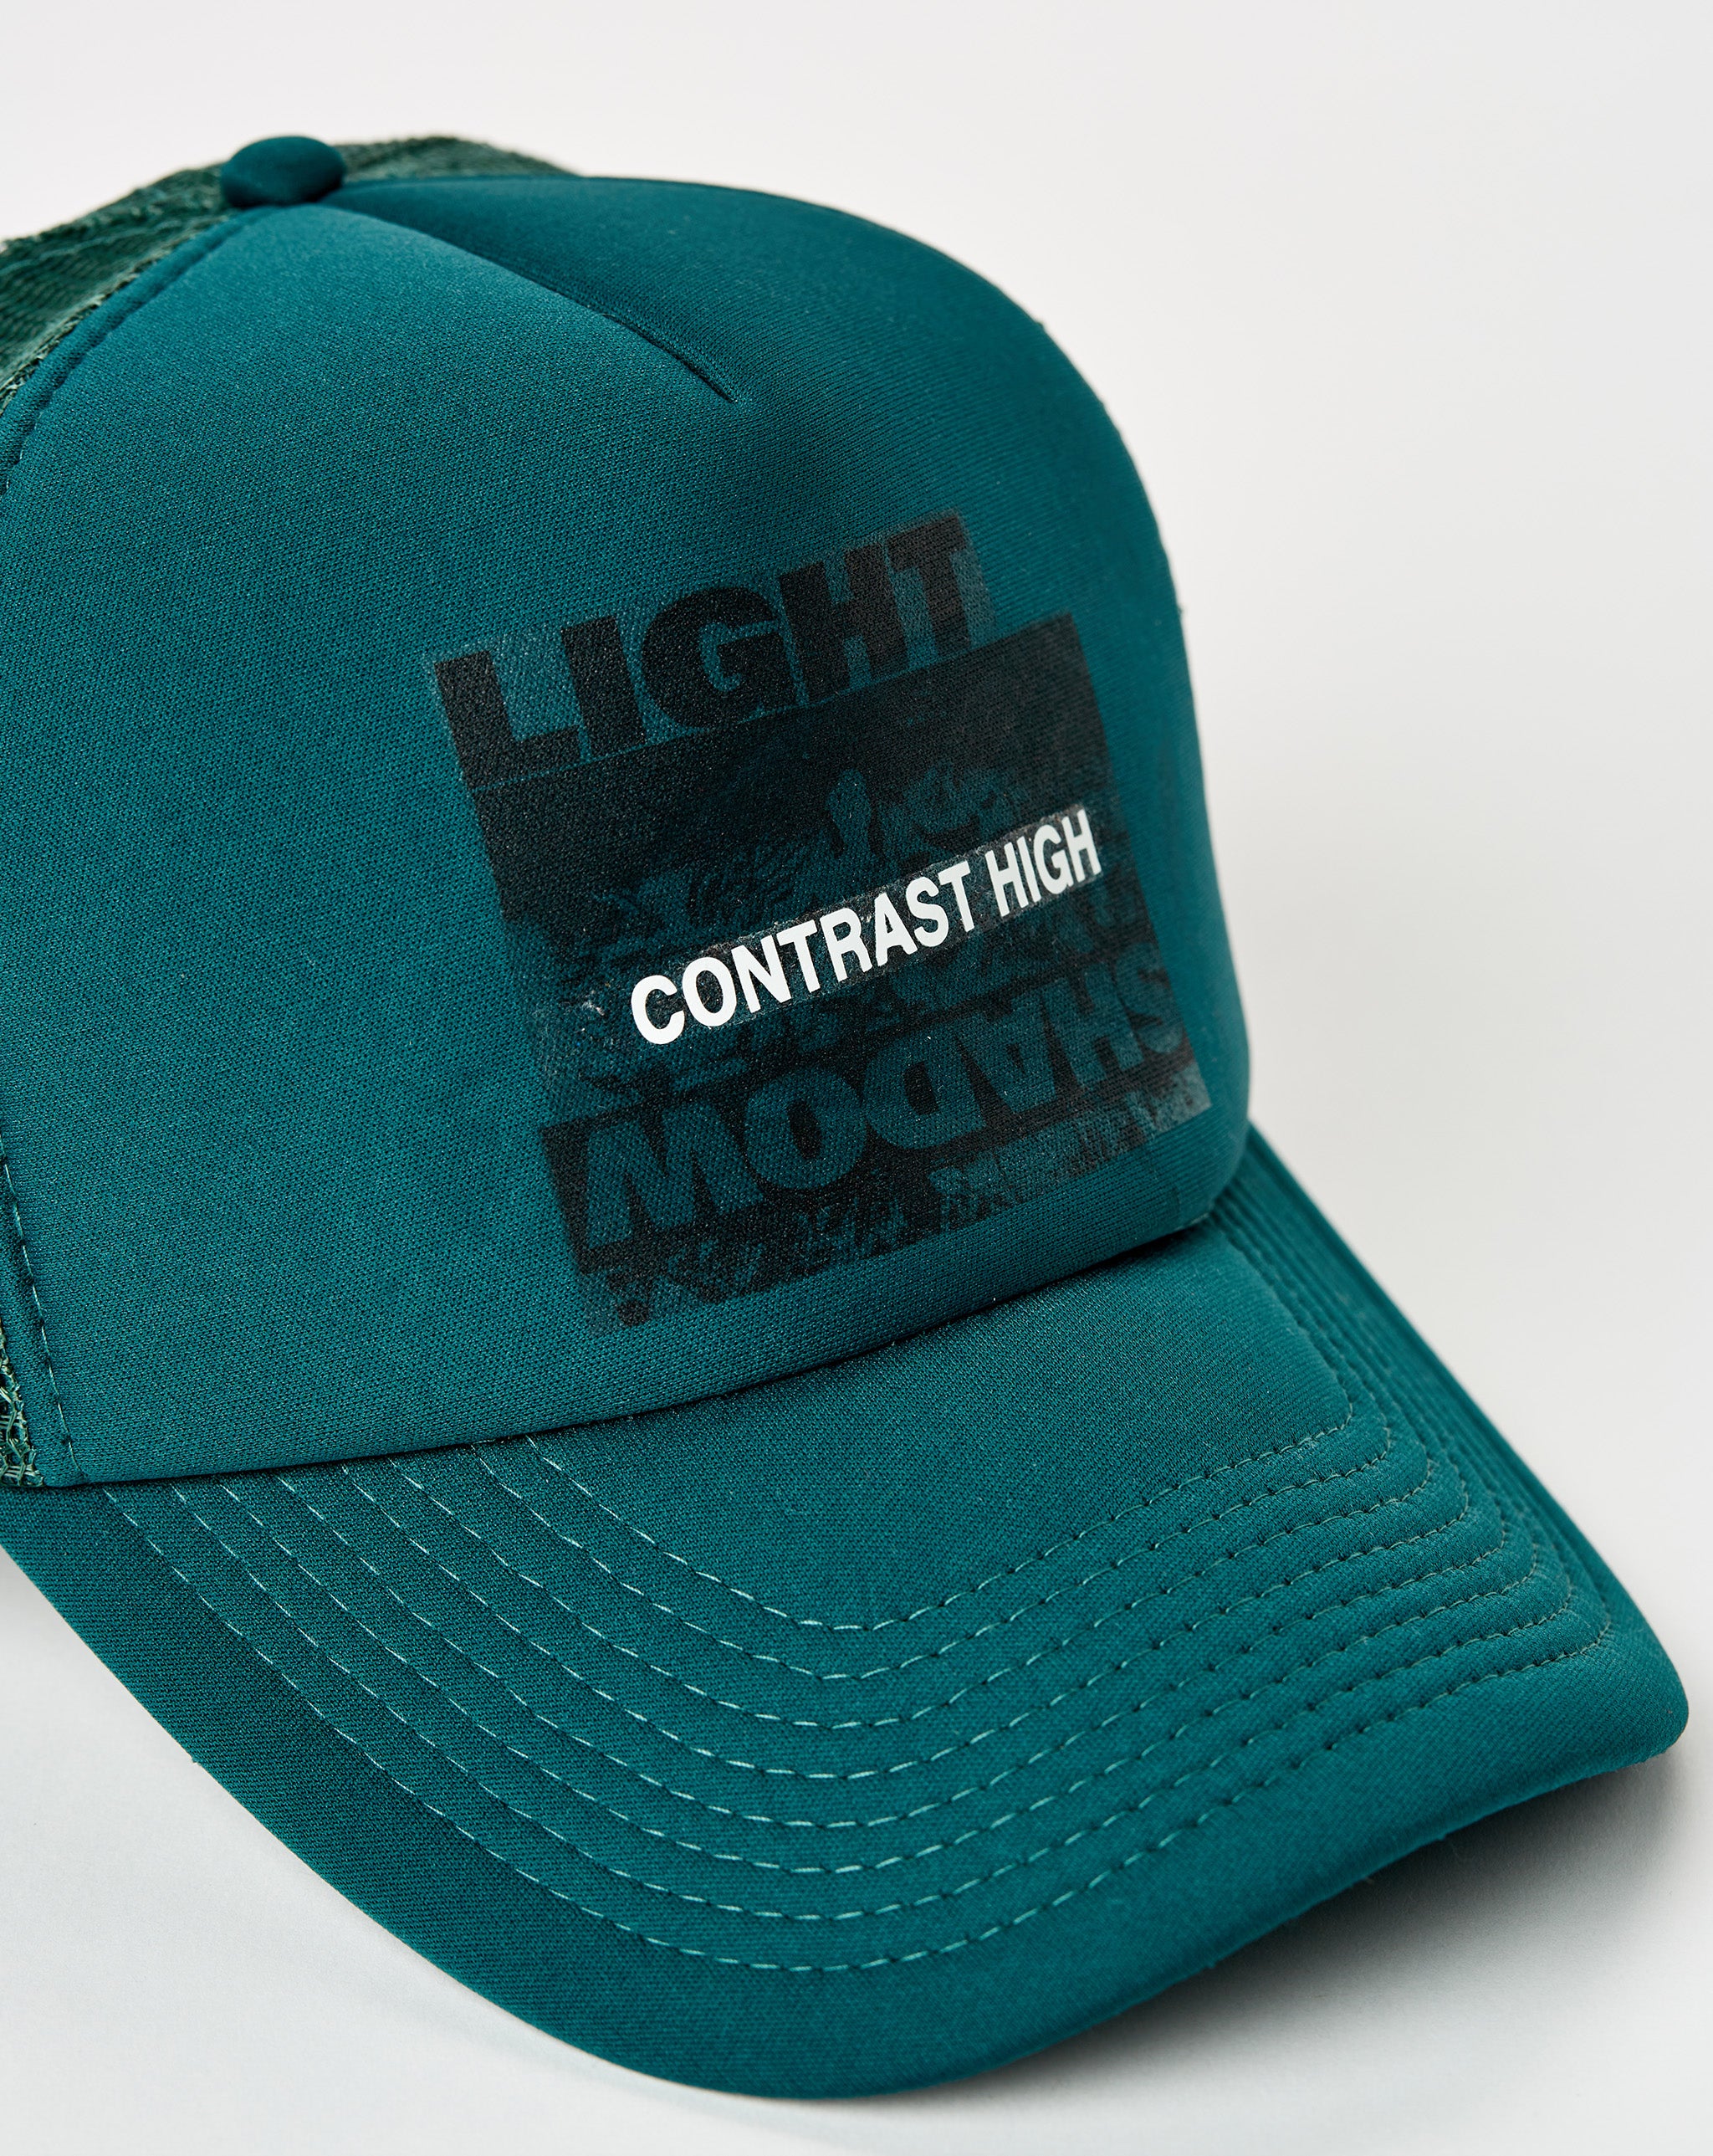 Contrast High CHxX Light/Shadow Hat  - XHIBITION